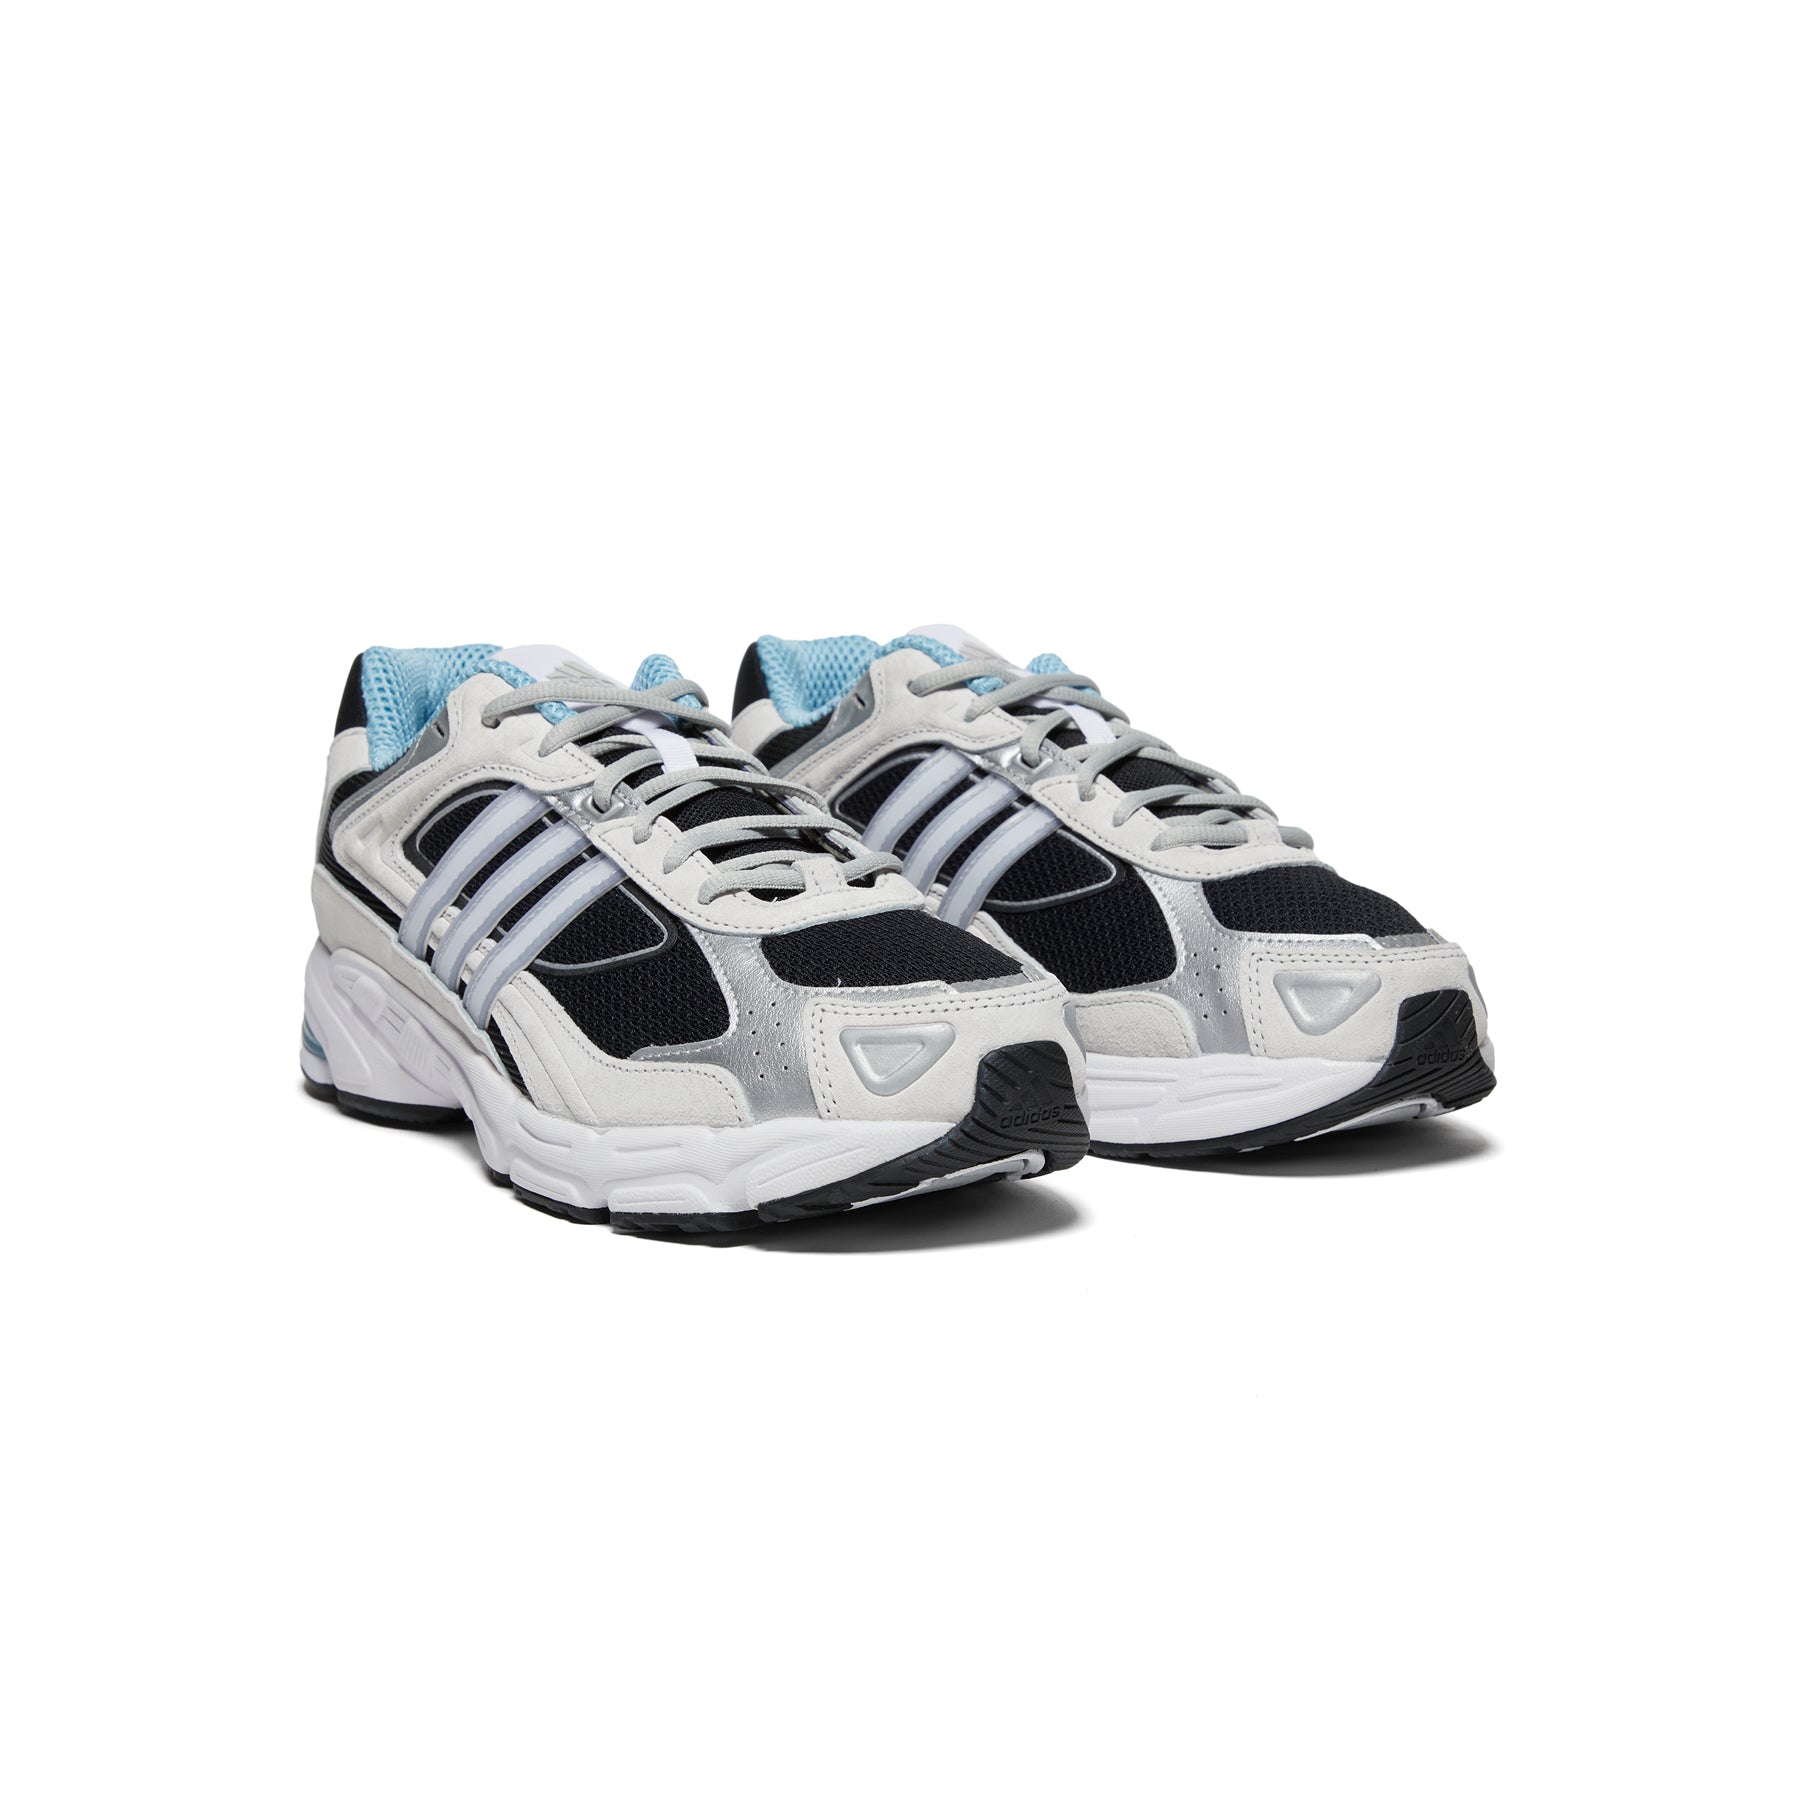 Adidas Response Concepts White/Blue) – (Core Black/Feather CL